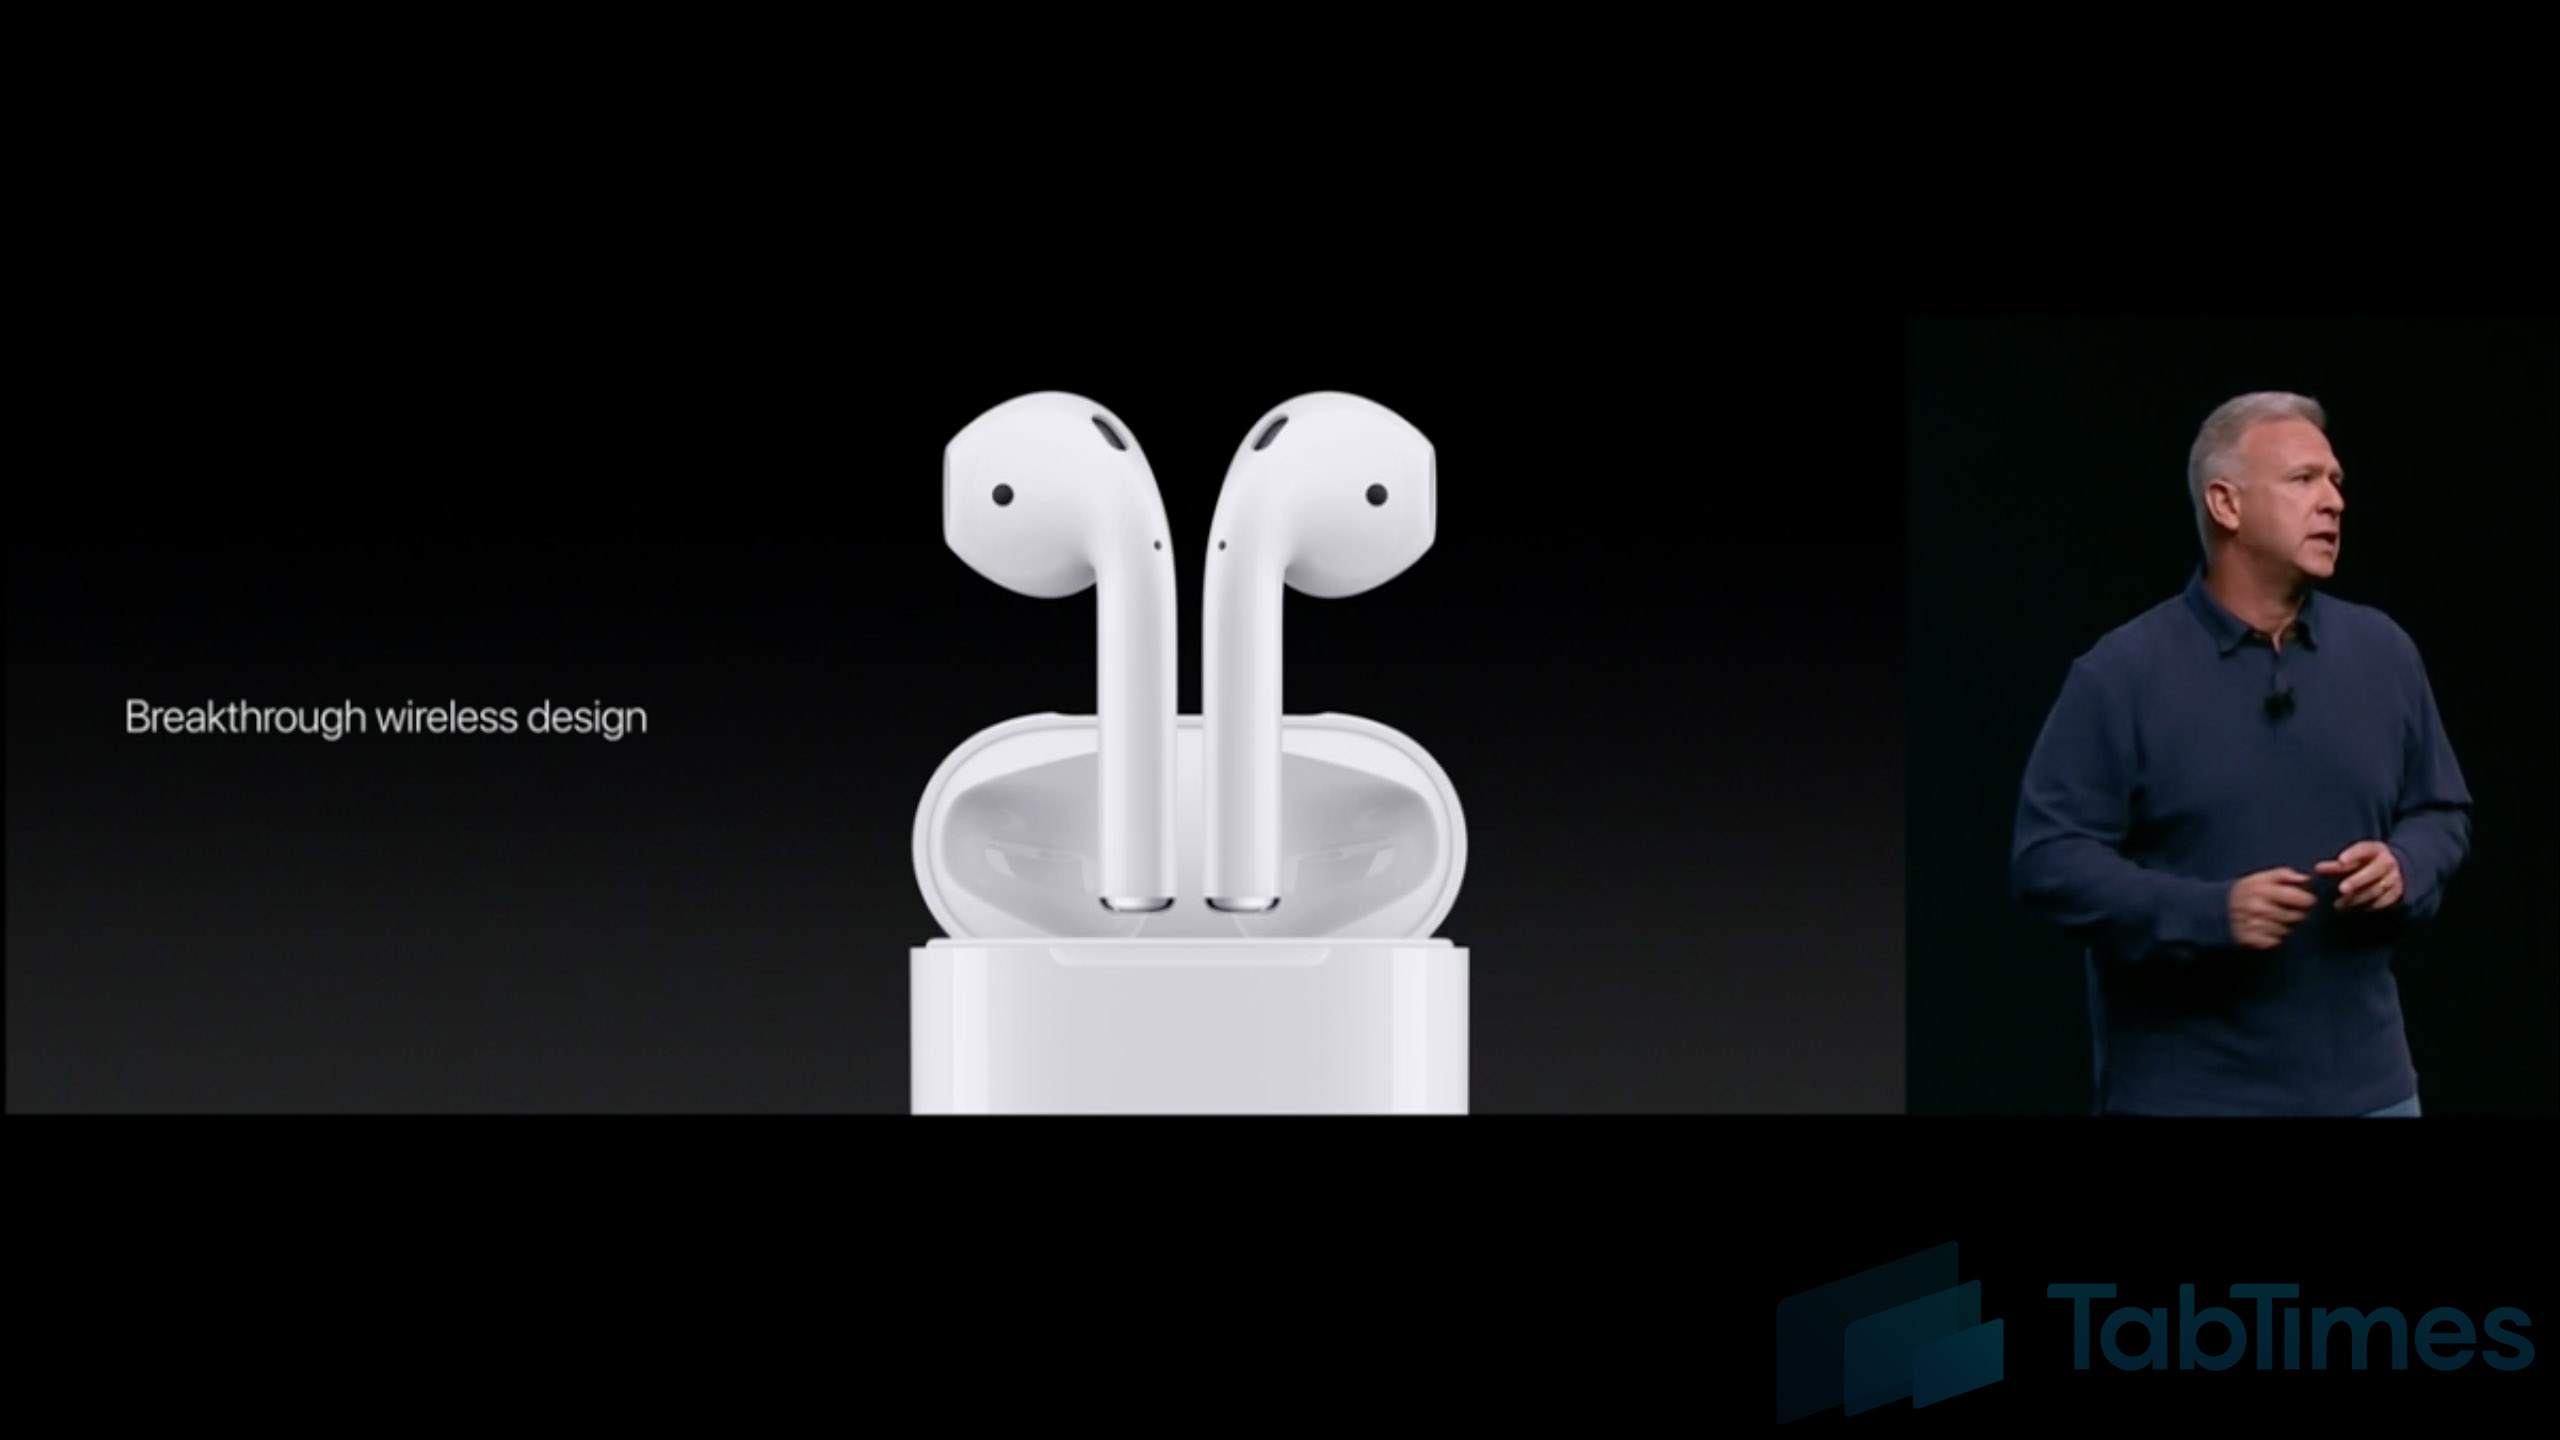 Apple-Event-iPhone-7-and-7-plus-airpods-breakthrough-design